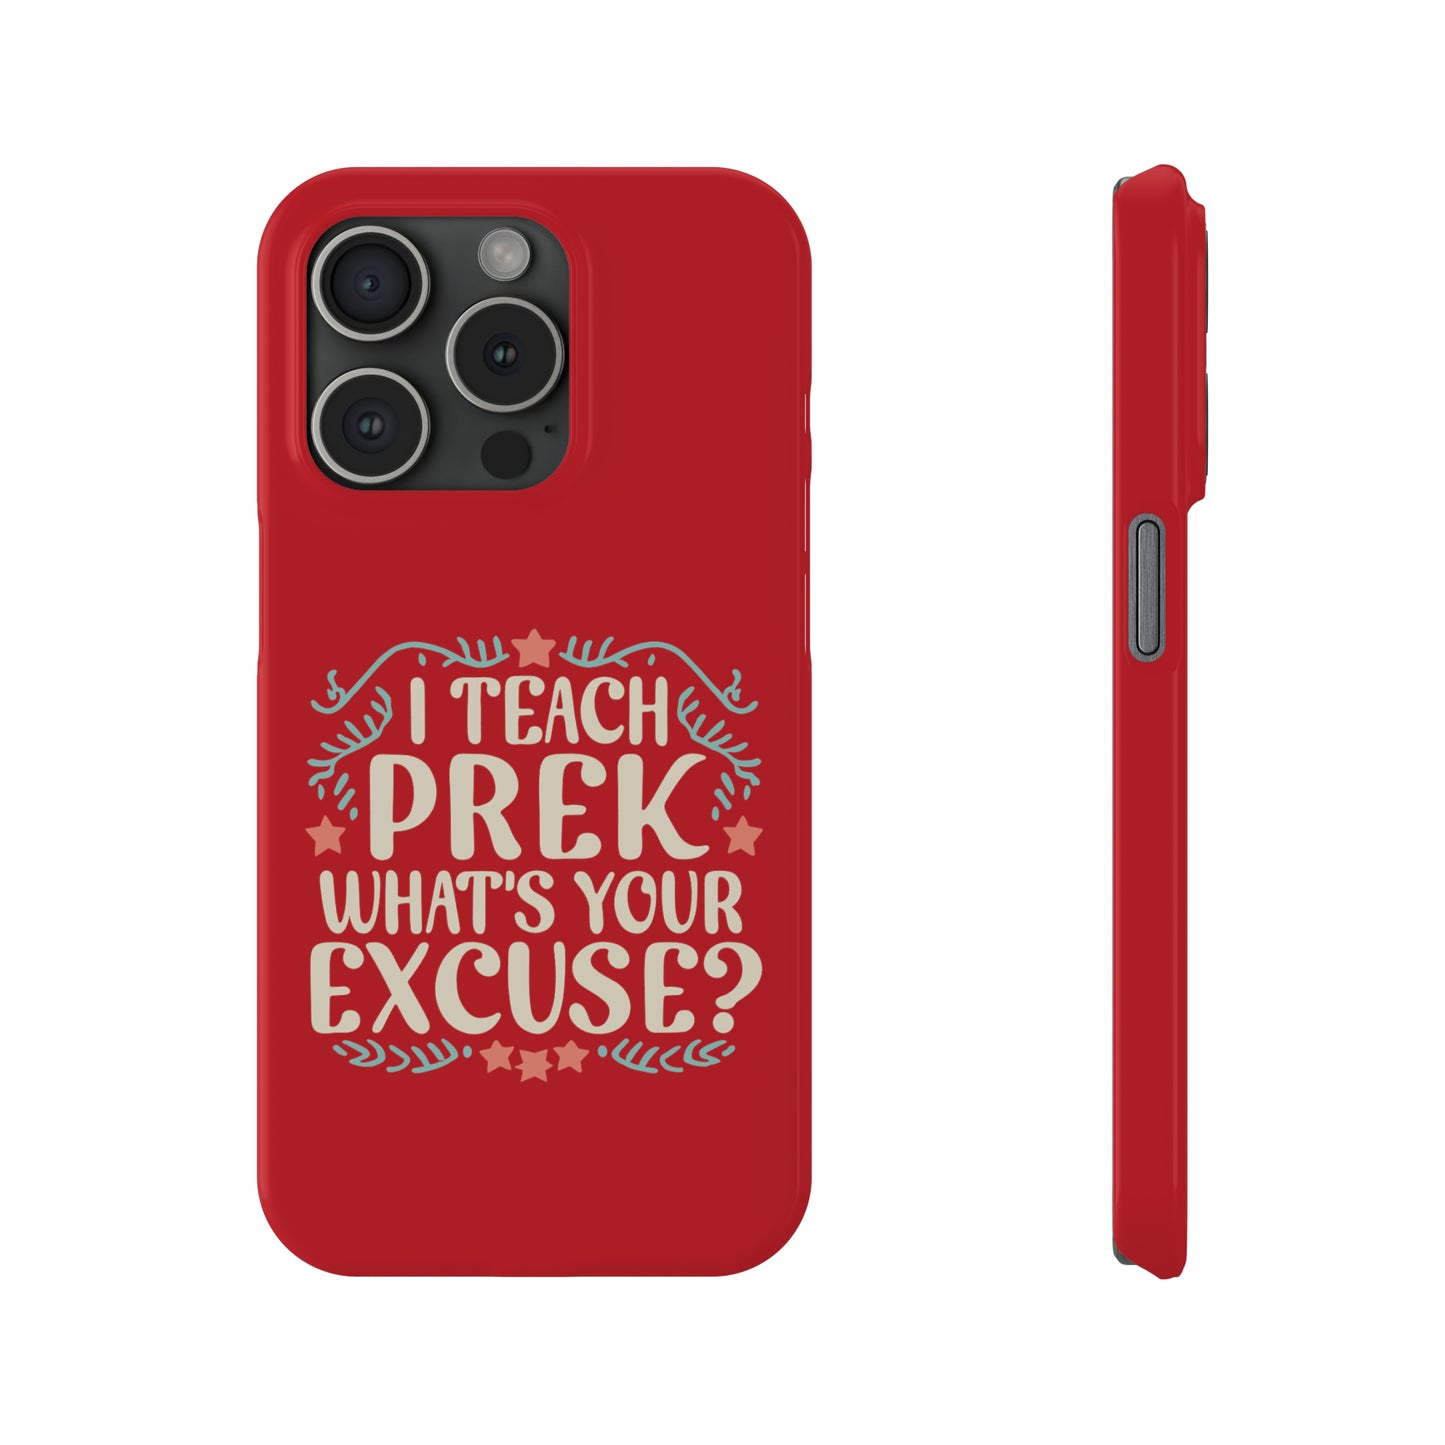 PreK Teacher Slim Phone Case - "I Teach PreK - What's Your Excuse"